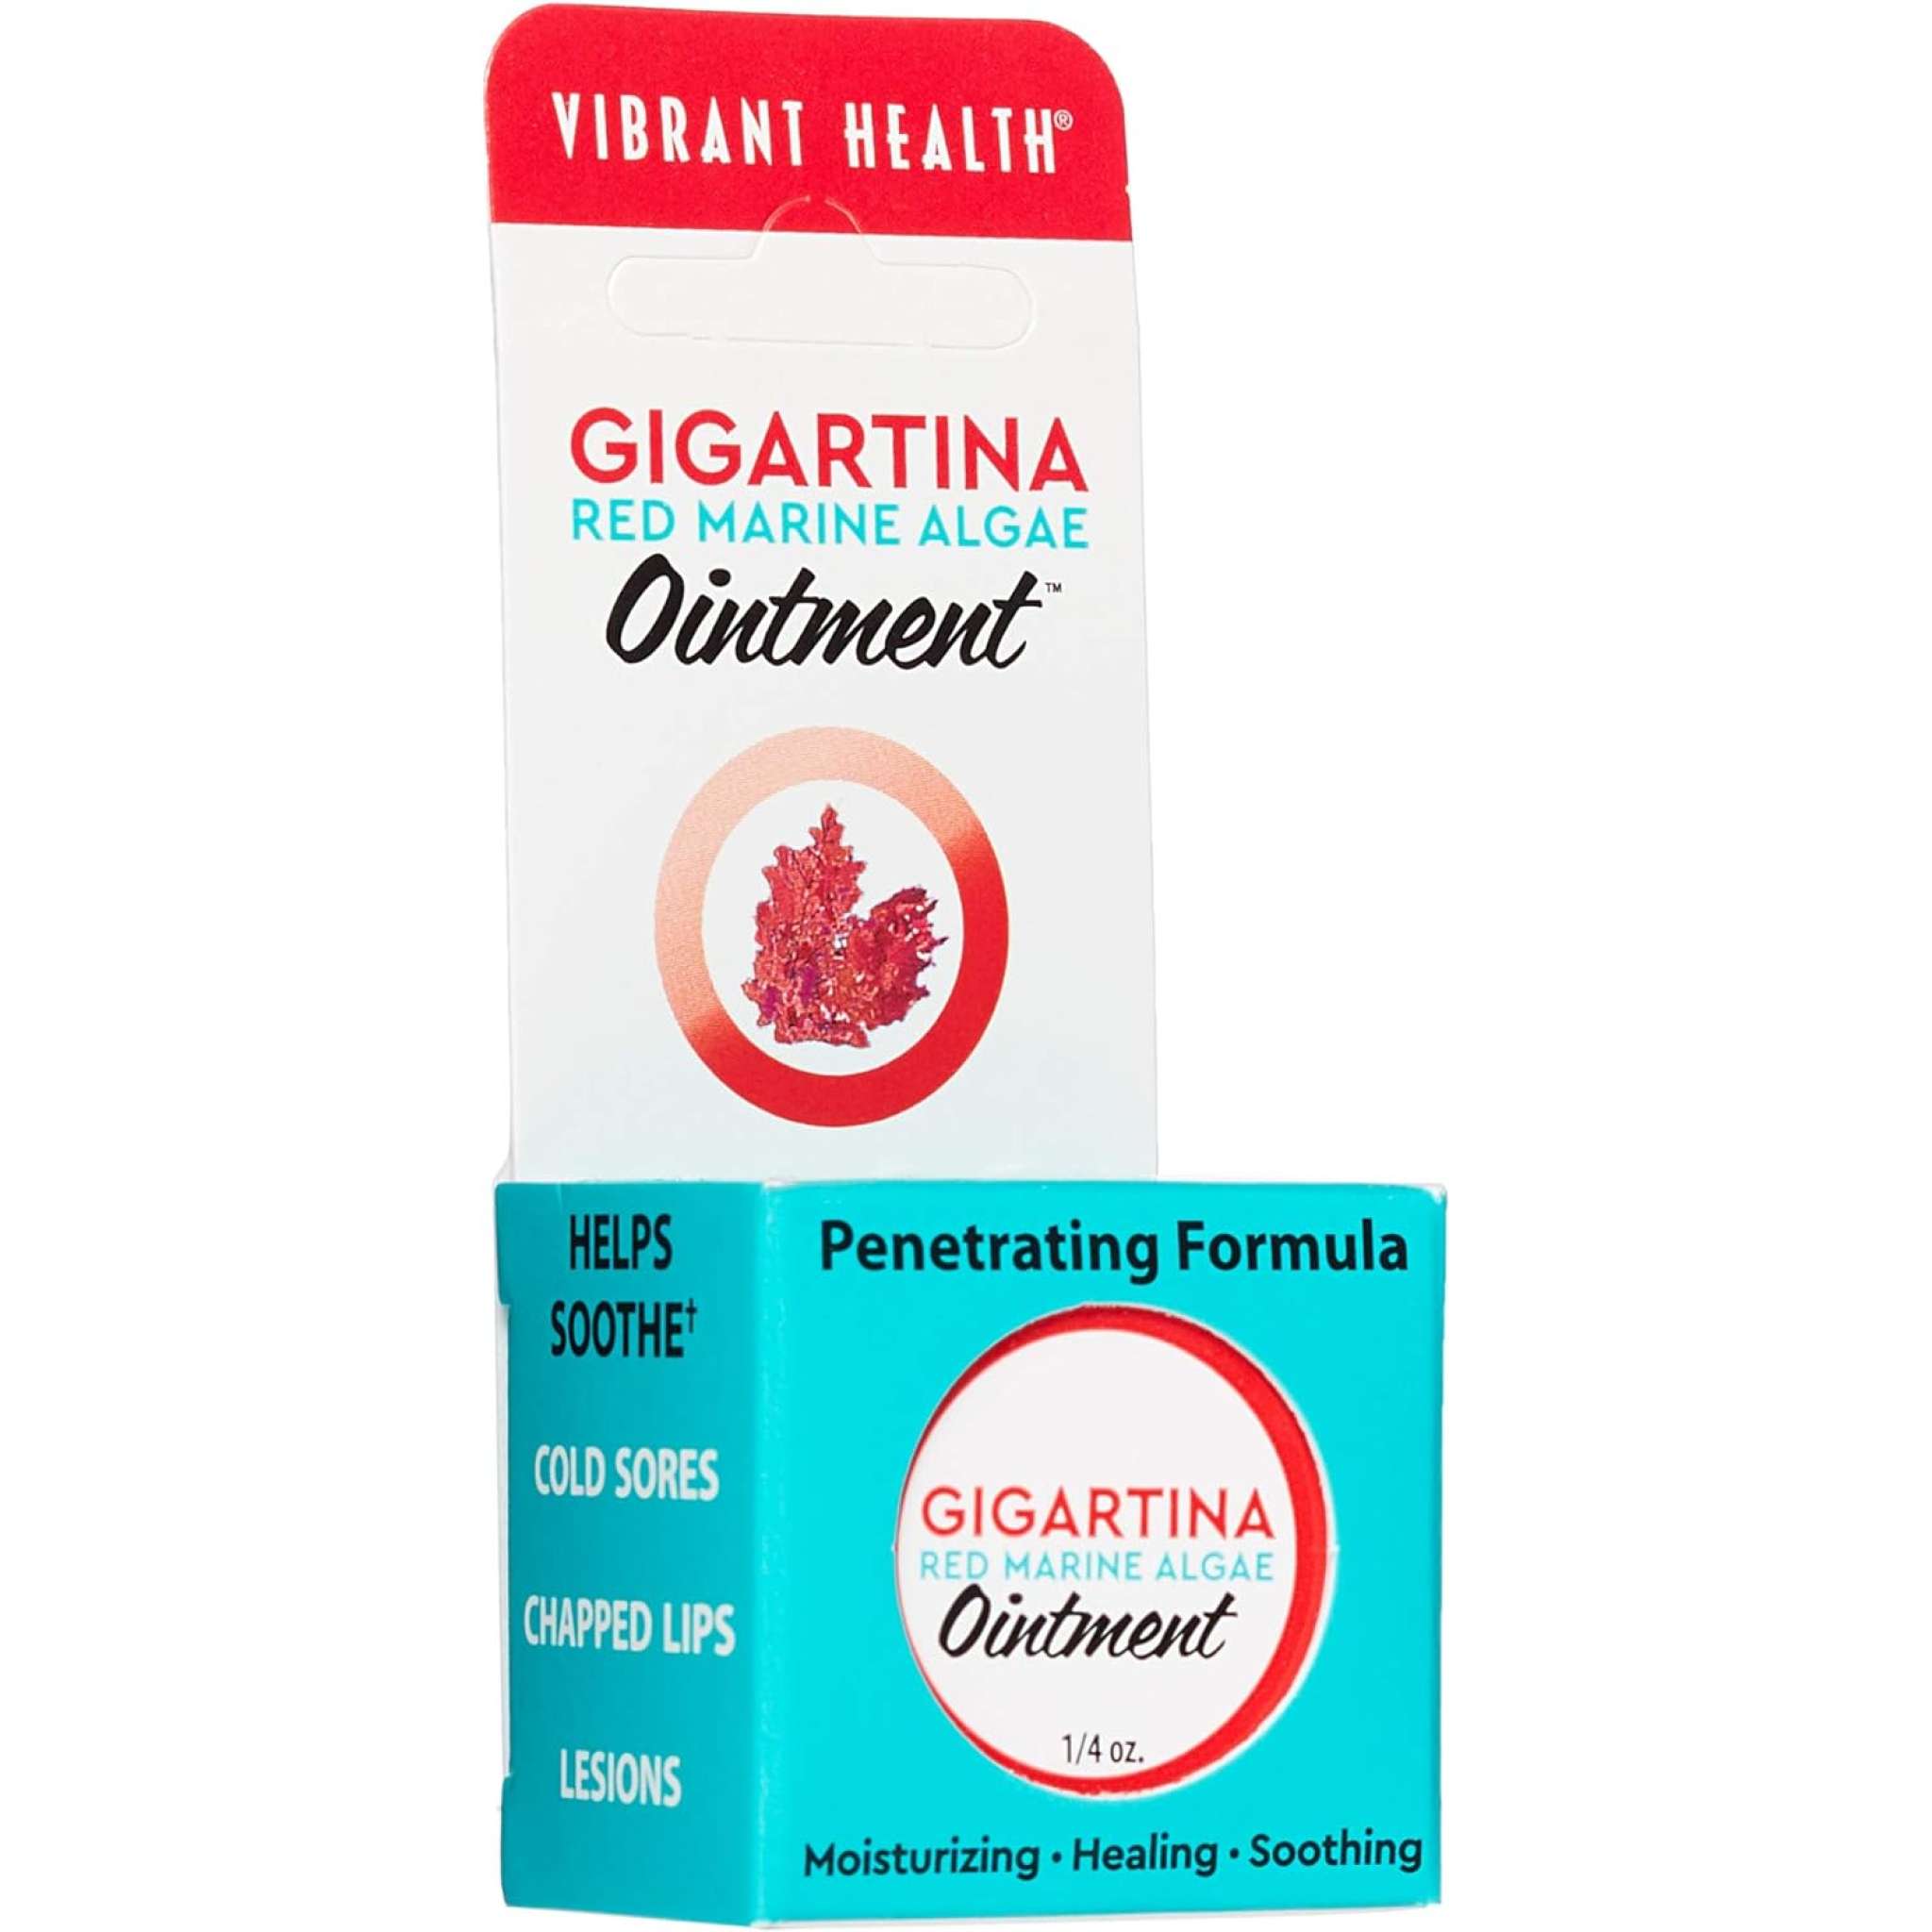 Vibrant Health - Rma Healing Ointment Gigartina